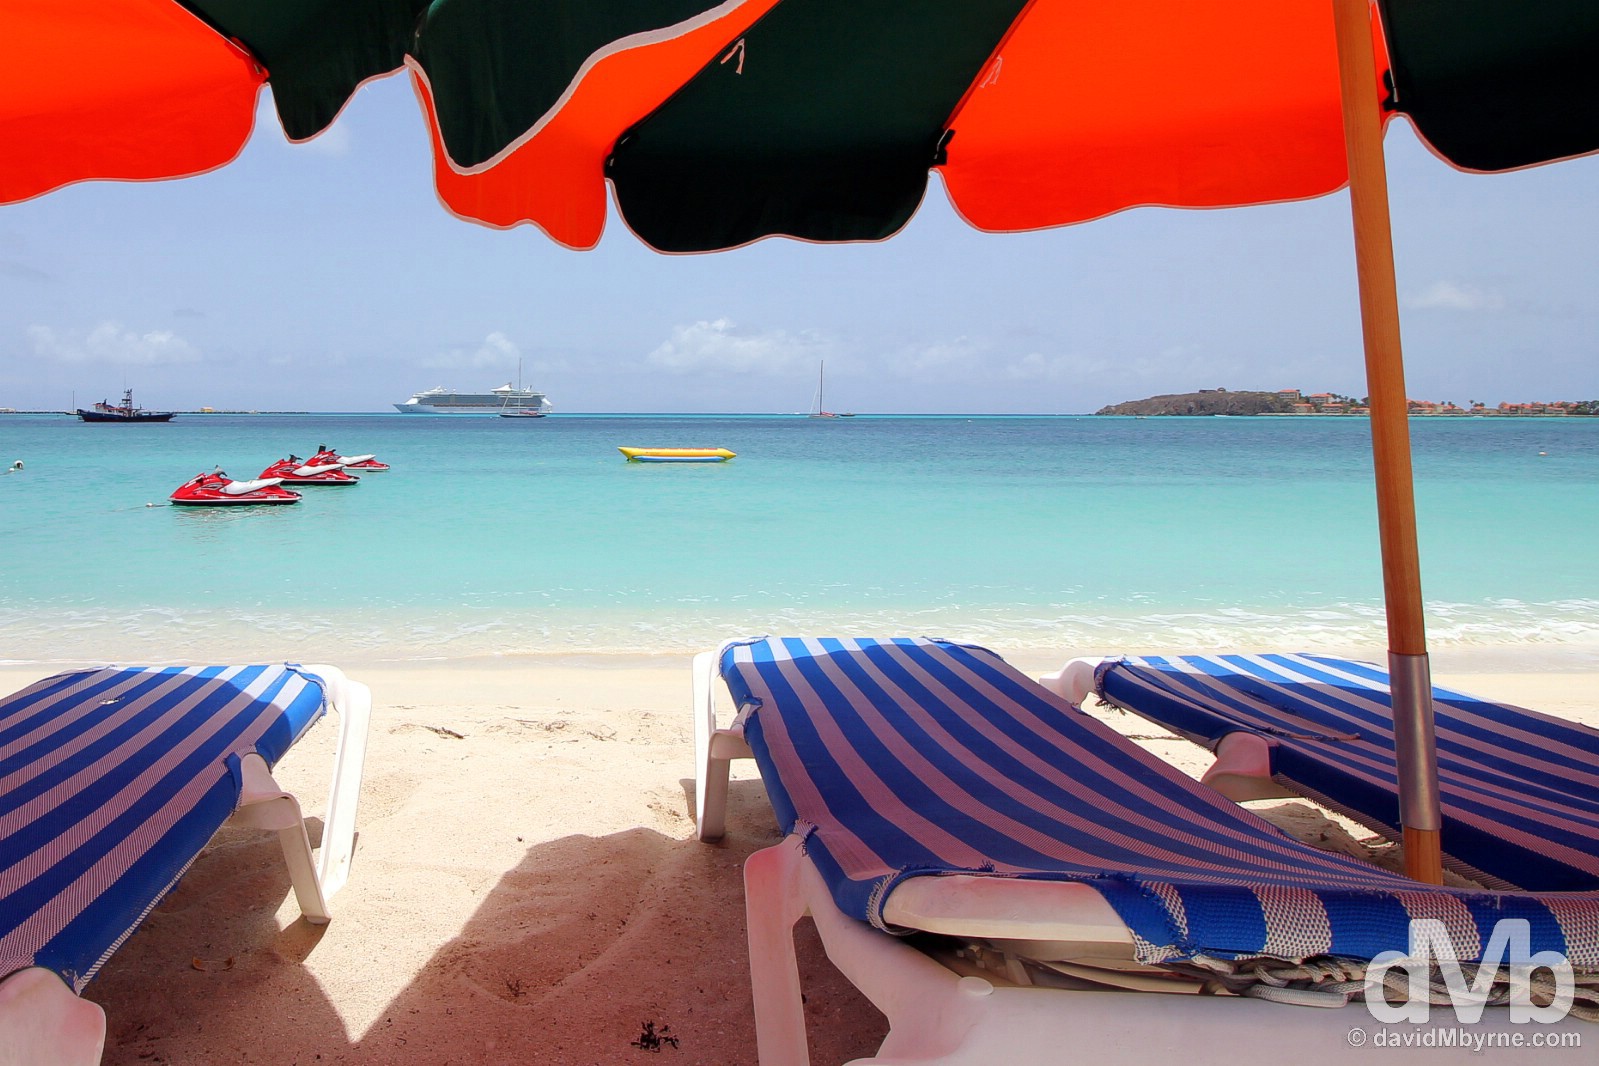 The beach in Philipsburg, Sint Maarten, Lesser Antilles. June 8, 2015.